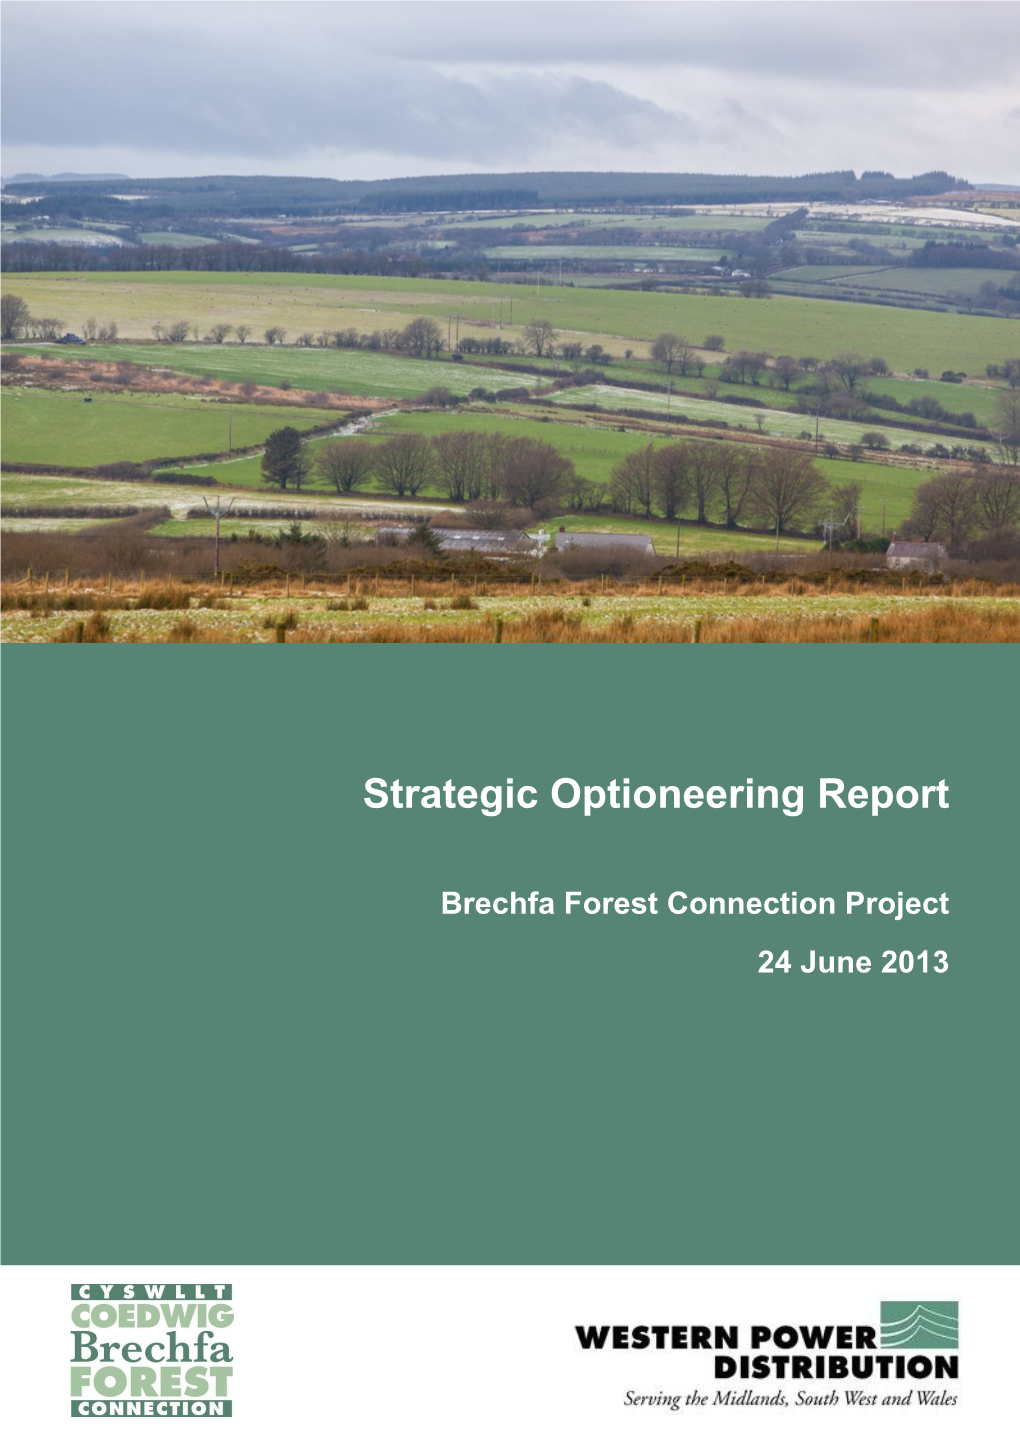 Strategic Optioneering Report